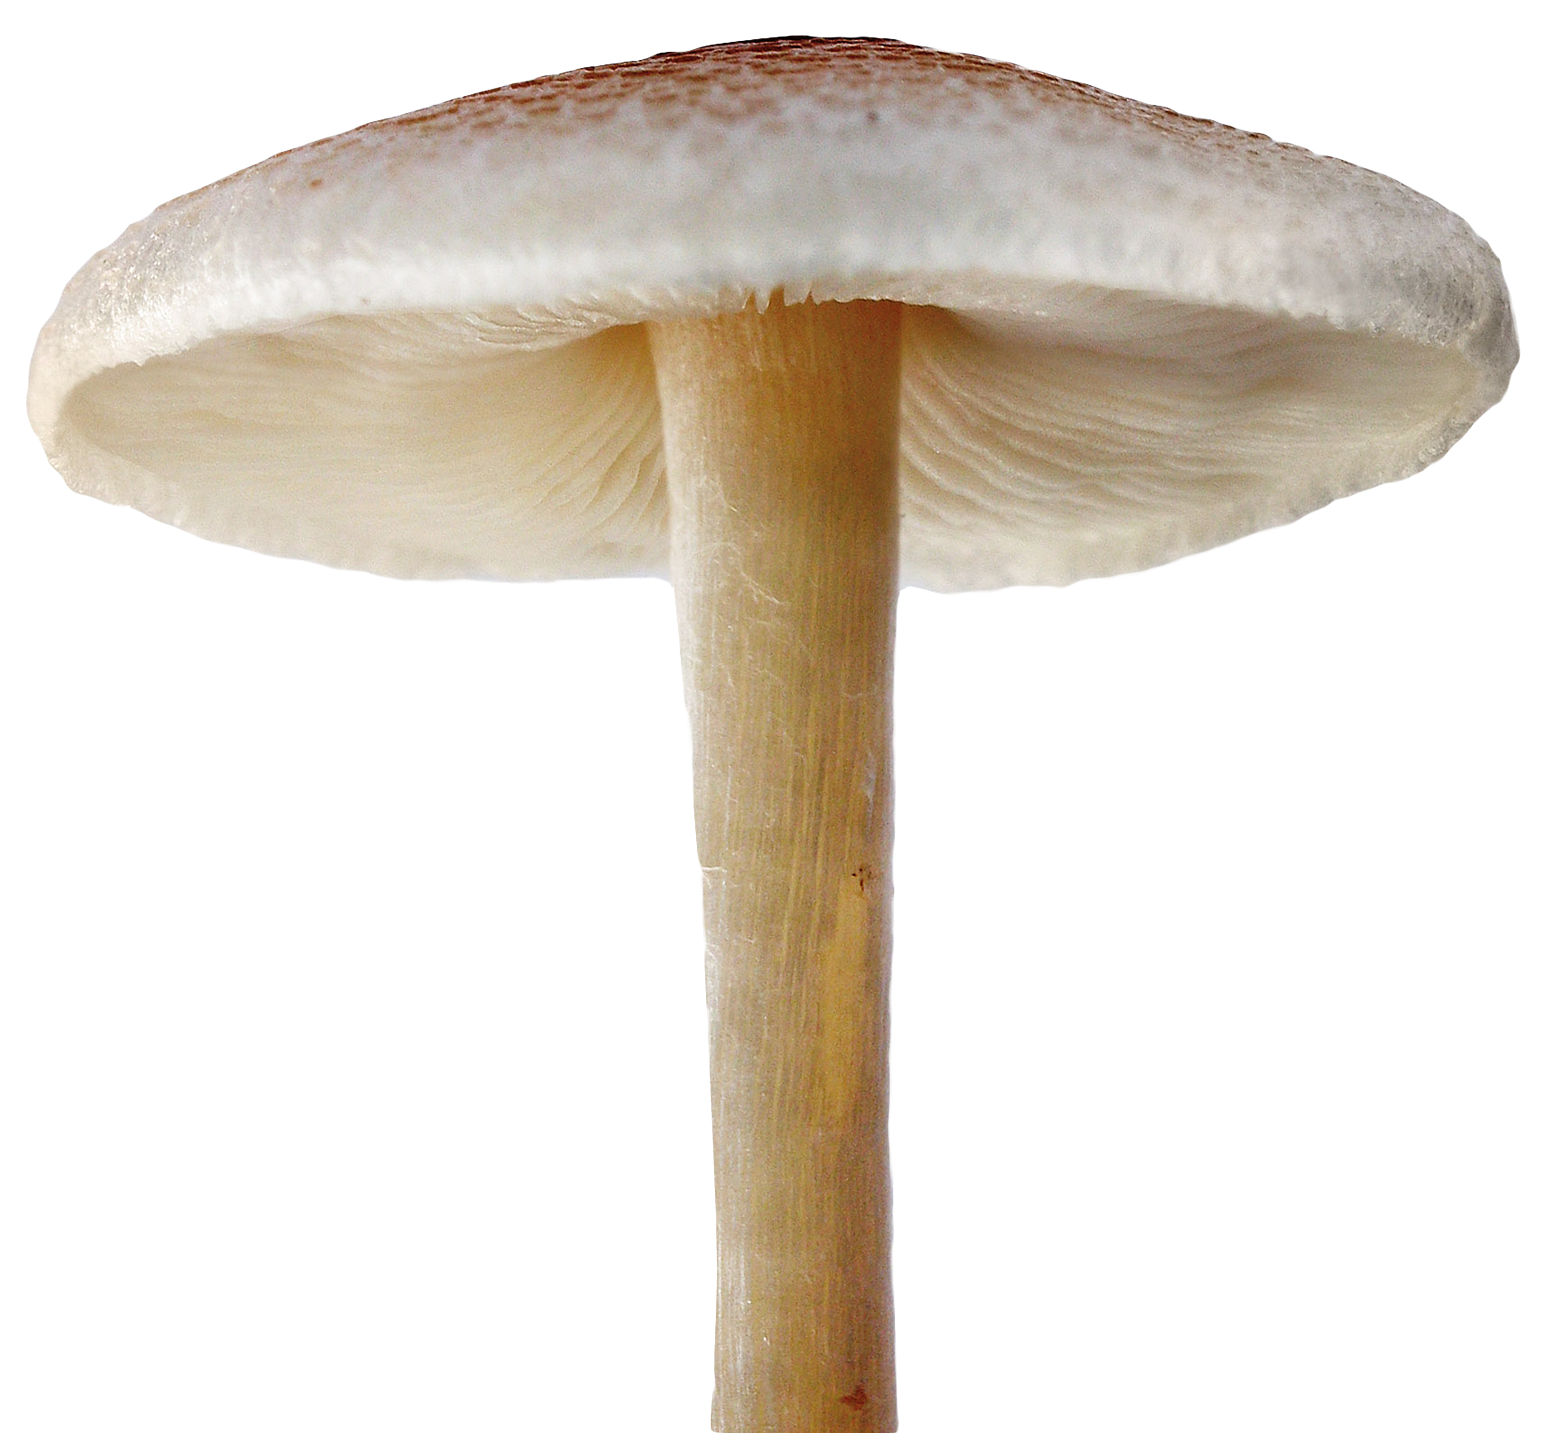 Mushroom PNG HD - 128865